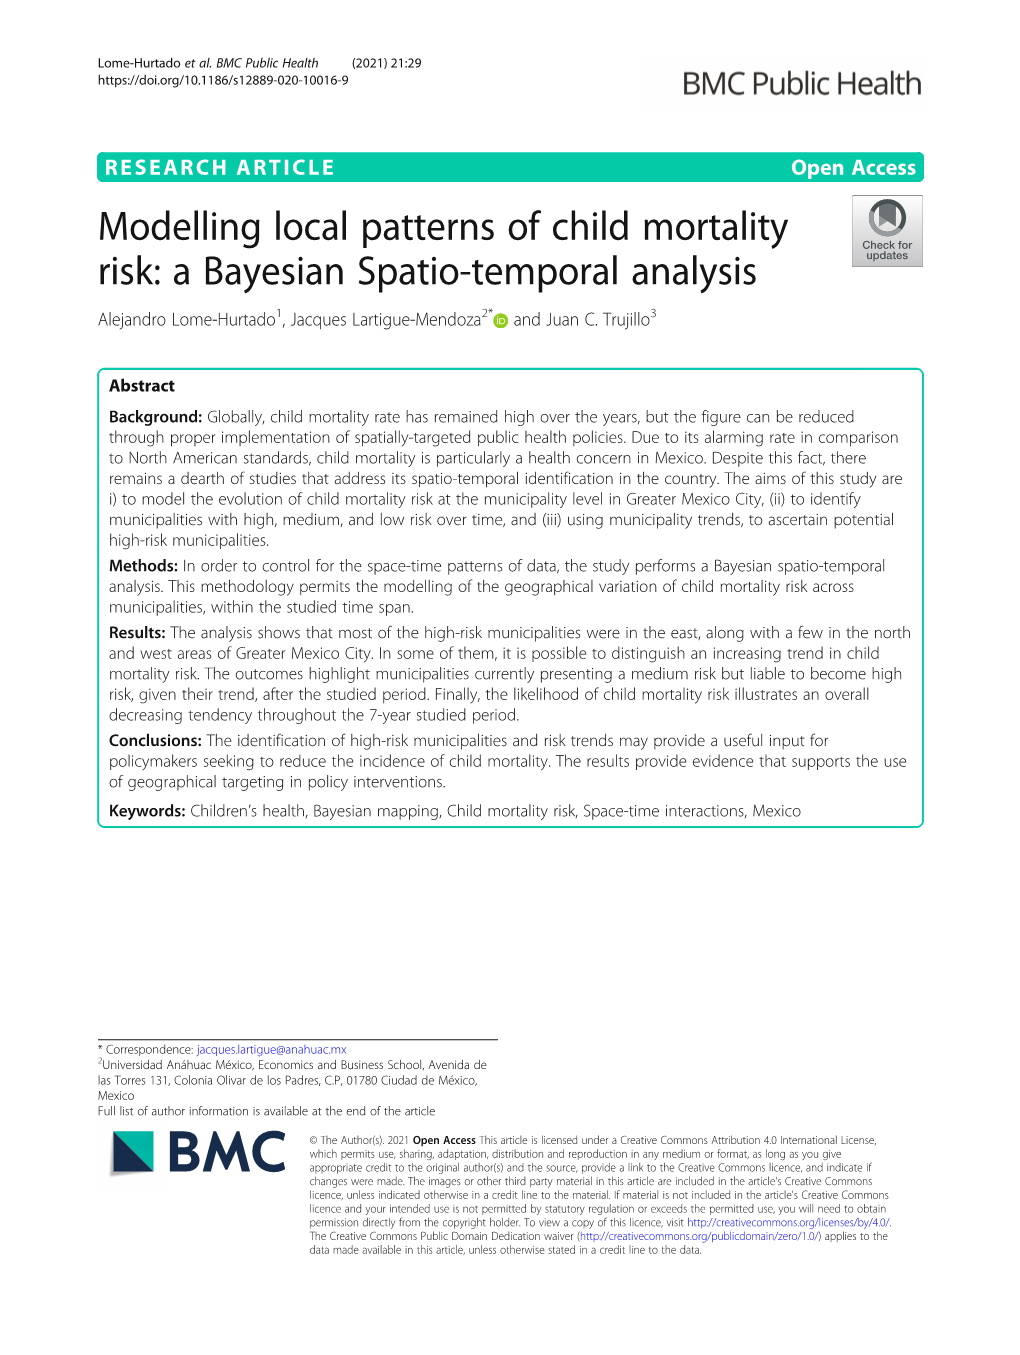 Modelling Local Patterns of Child Mortality Risk: a Bayesian Spatio-Temporal Analysis Alejandro Lome-Hurtado1, Jacques Lartigue-Mendoza2* and Juan C